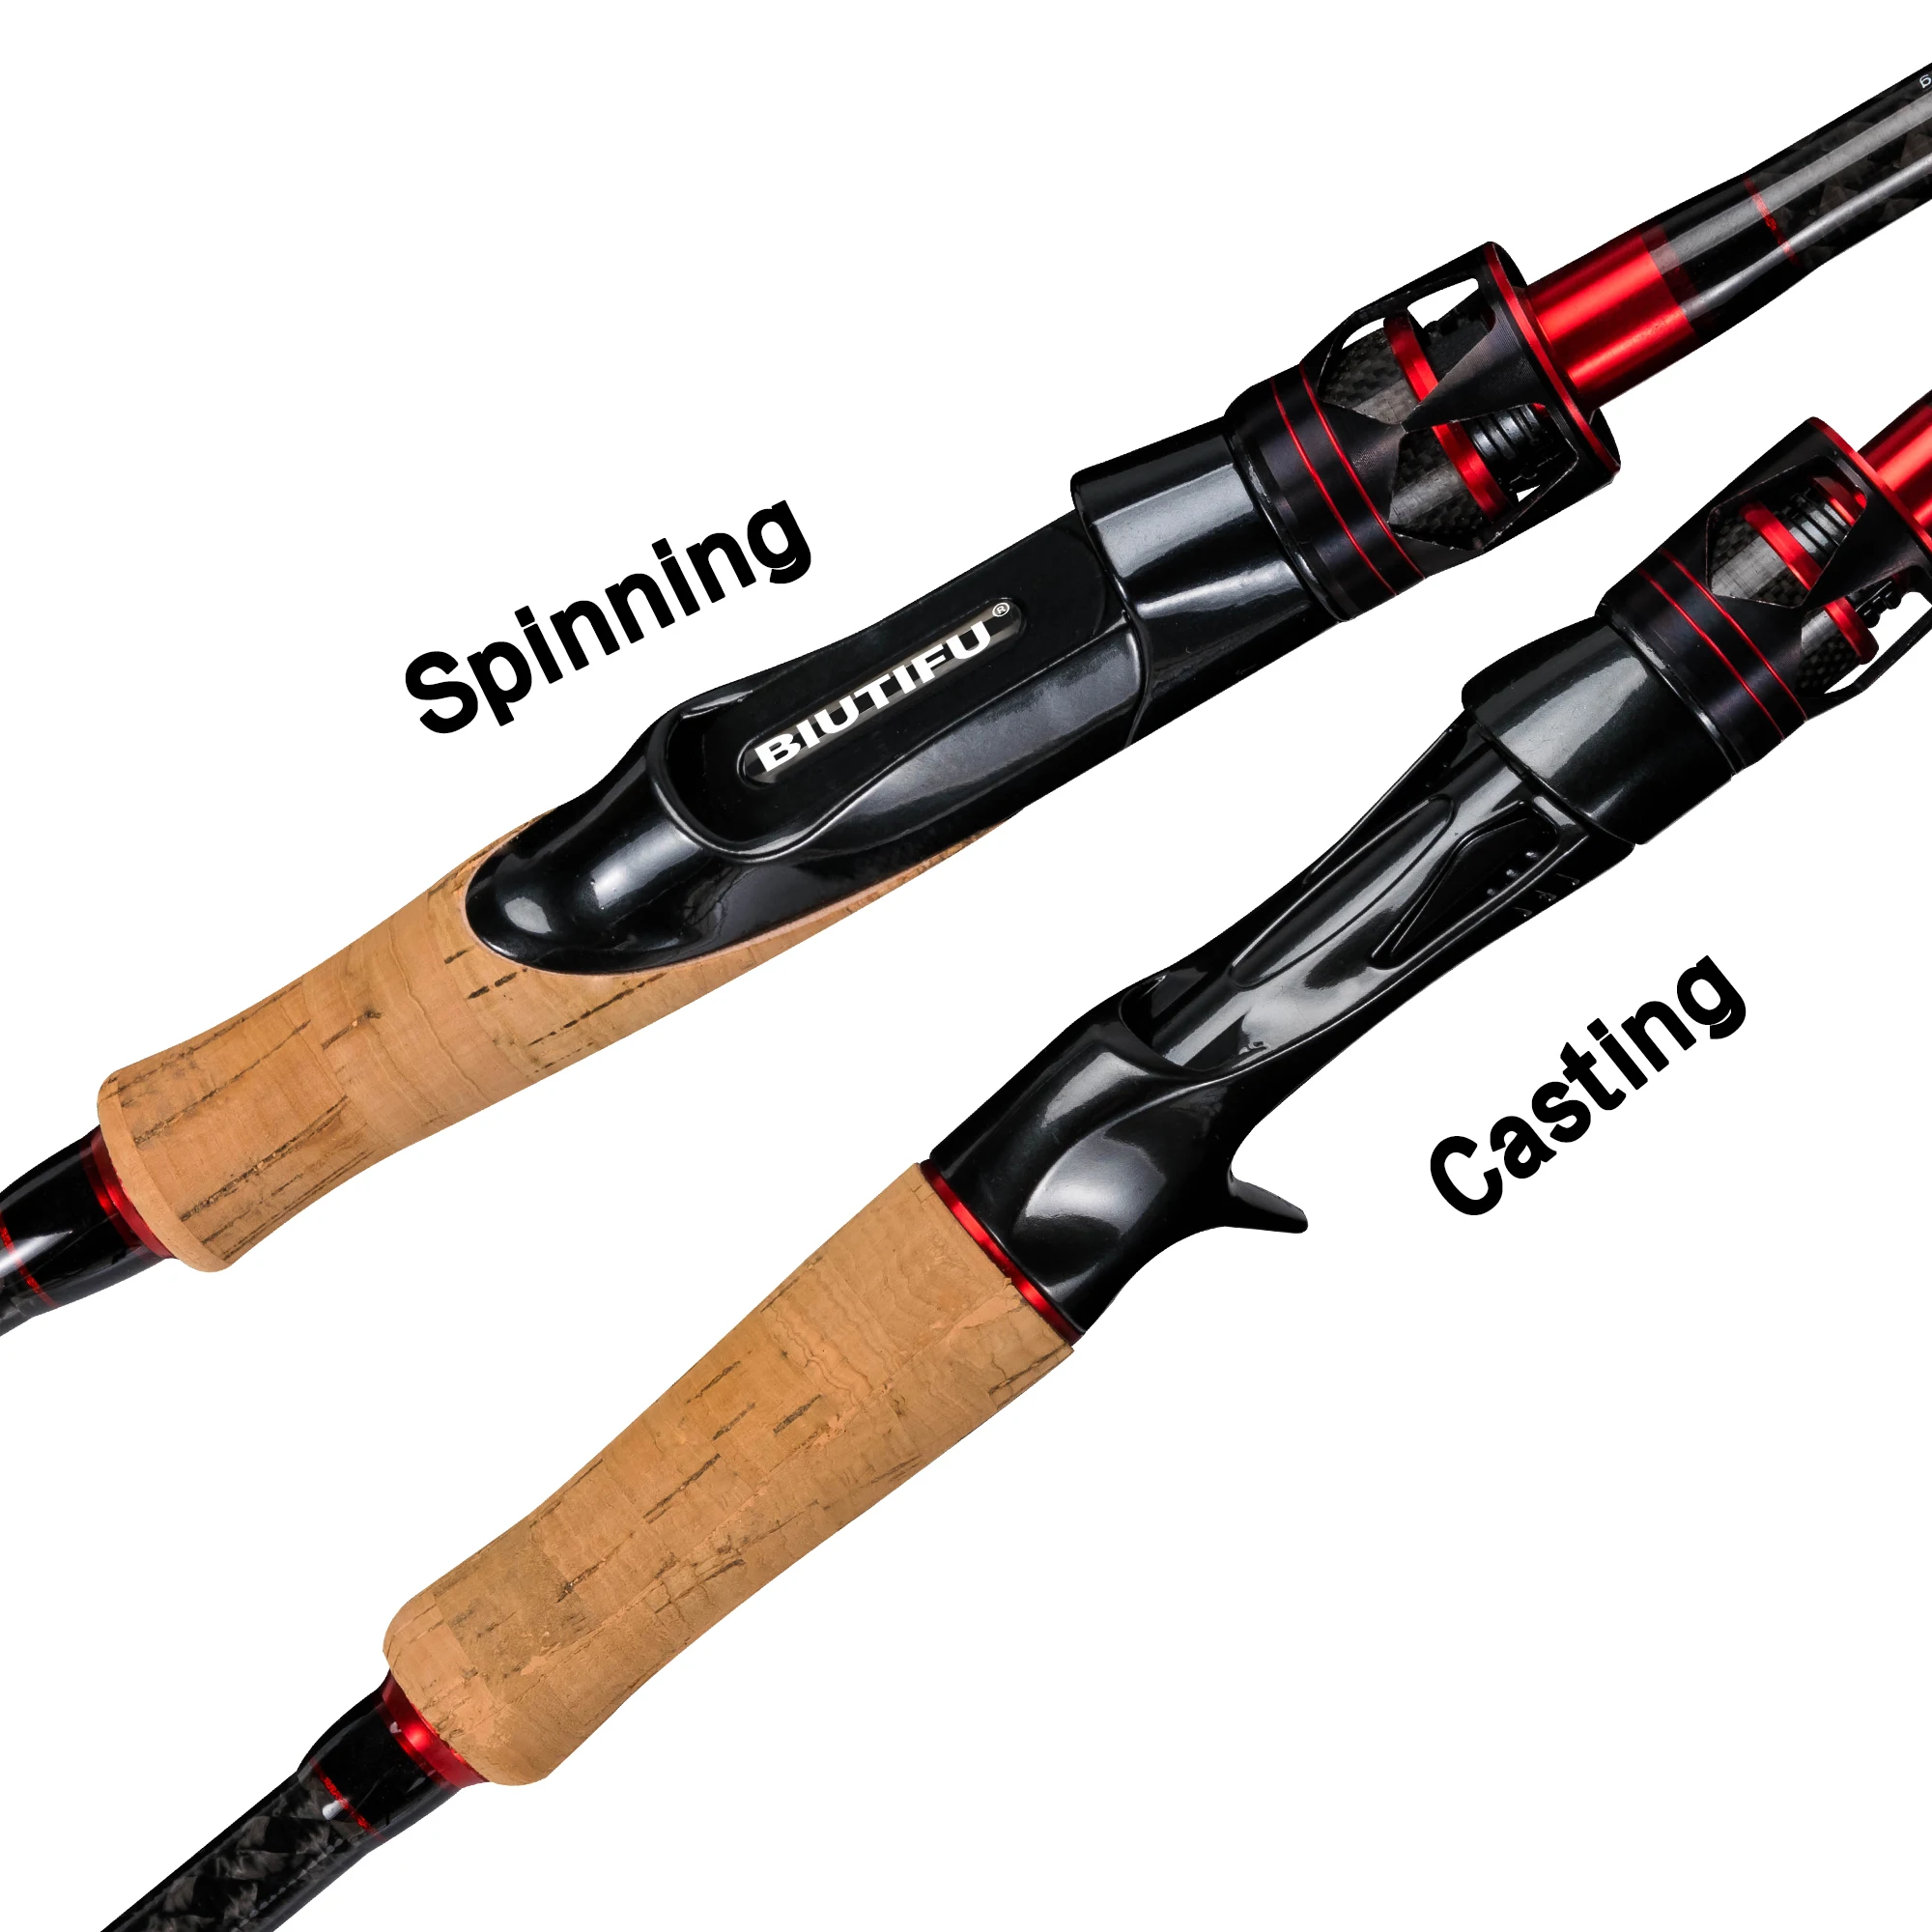 BIUTIFU ABILITY Casting Spinning Lure Fishing Rod 1.8/2.1 m t800 rozmieszczone dowolnie Carbon 2 Section 2 TIPS 4-35g ML/M/MH Baitcasting Surf Fast Pole